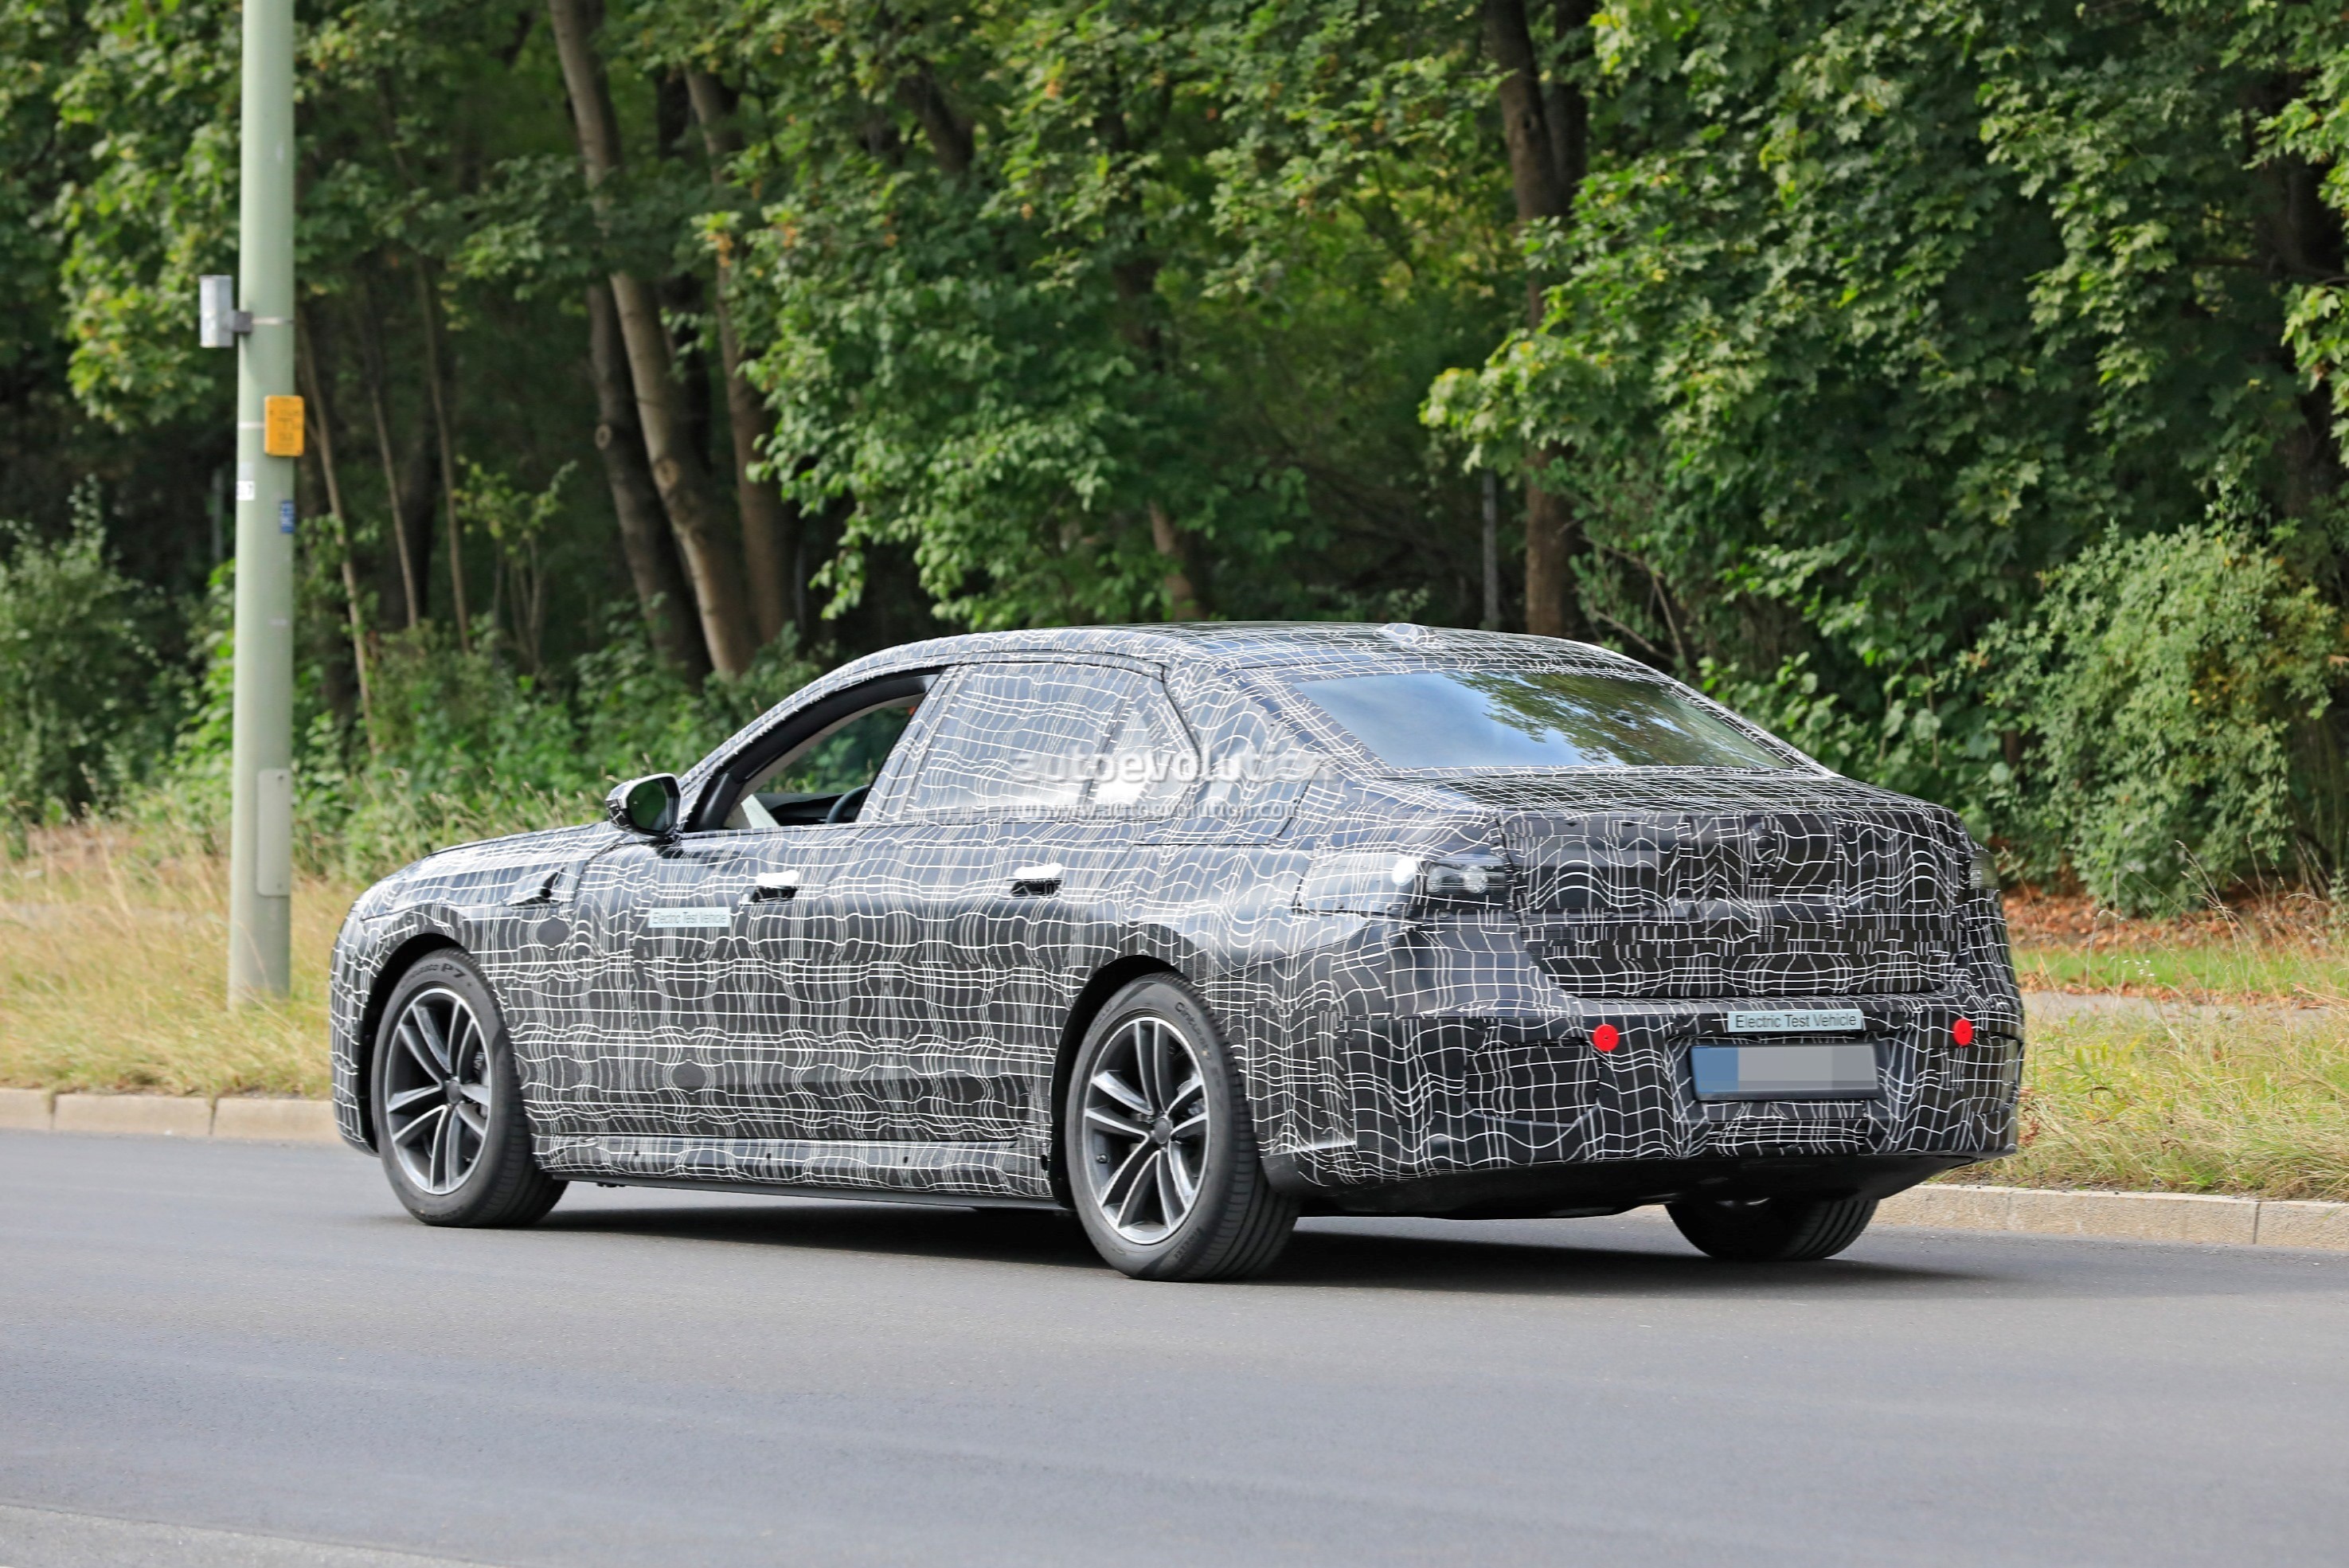 Electric BMW 7 Series Spied Road Testing, 2023 BMW i7 Looks Massive